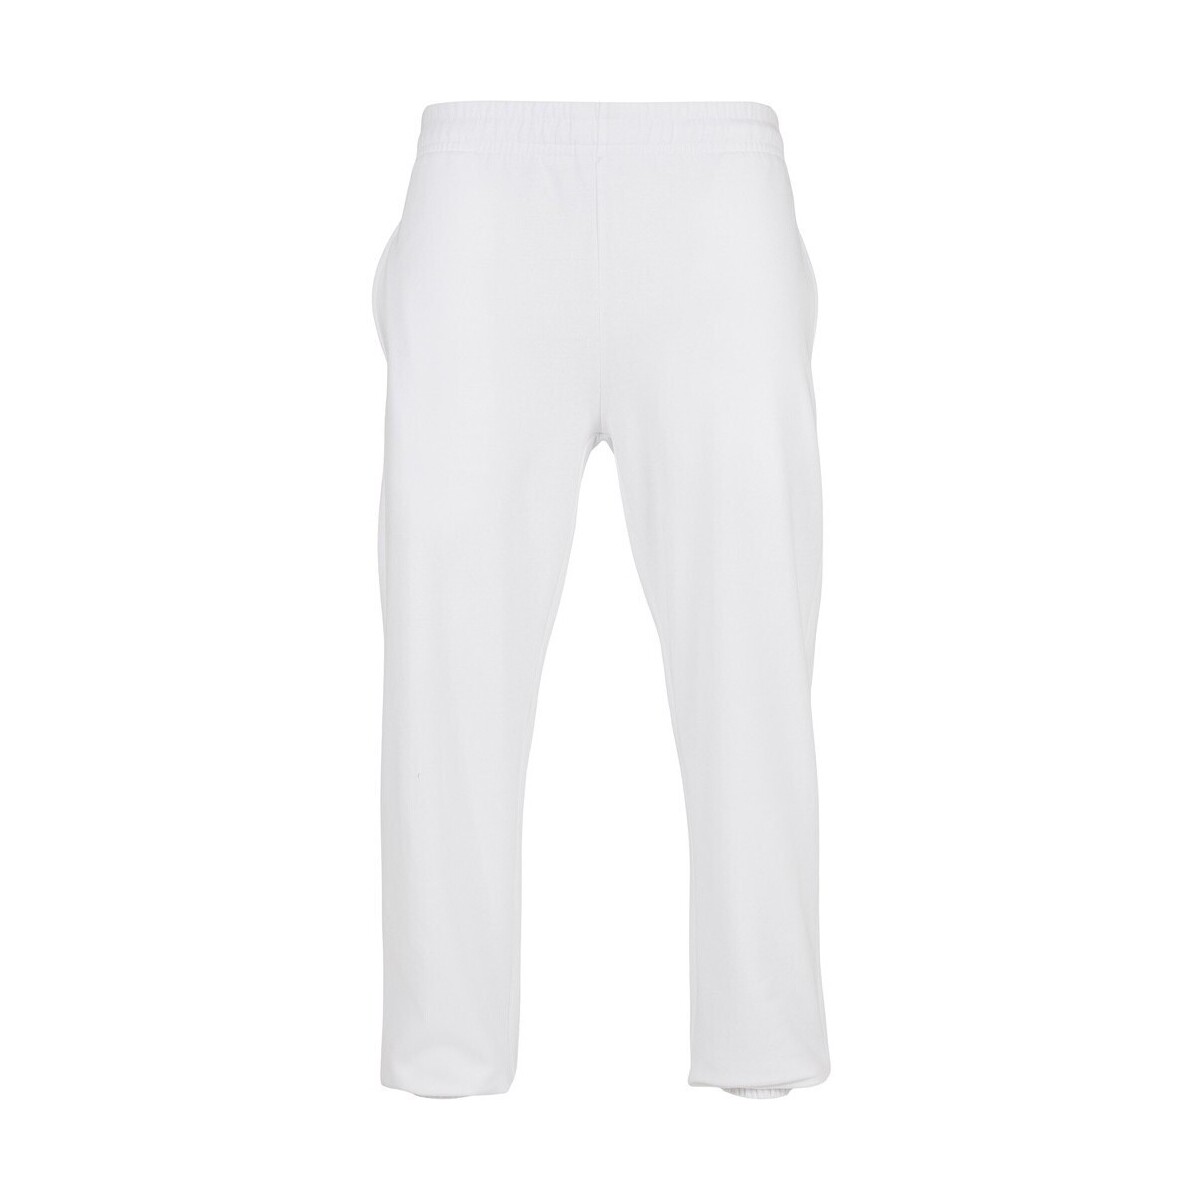 Vêtements Pantalons Build Your Brand Basic Blanc